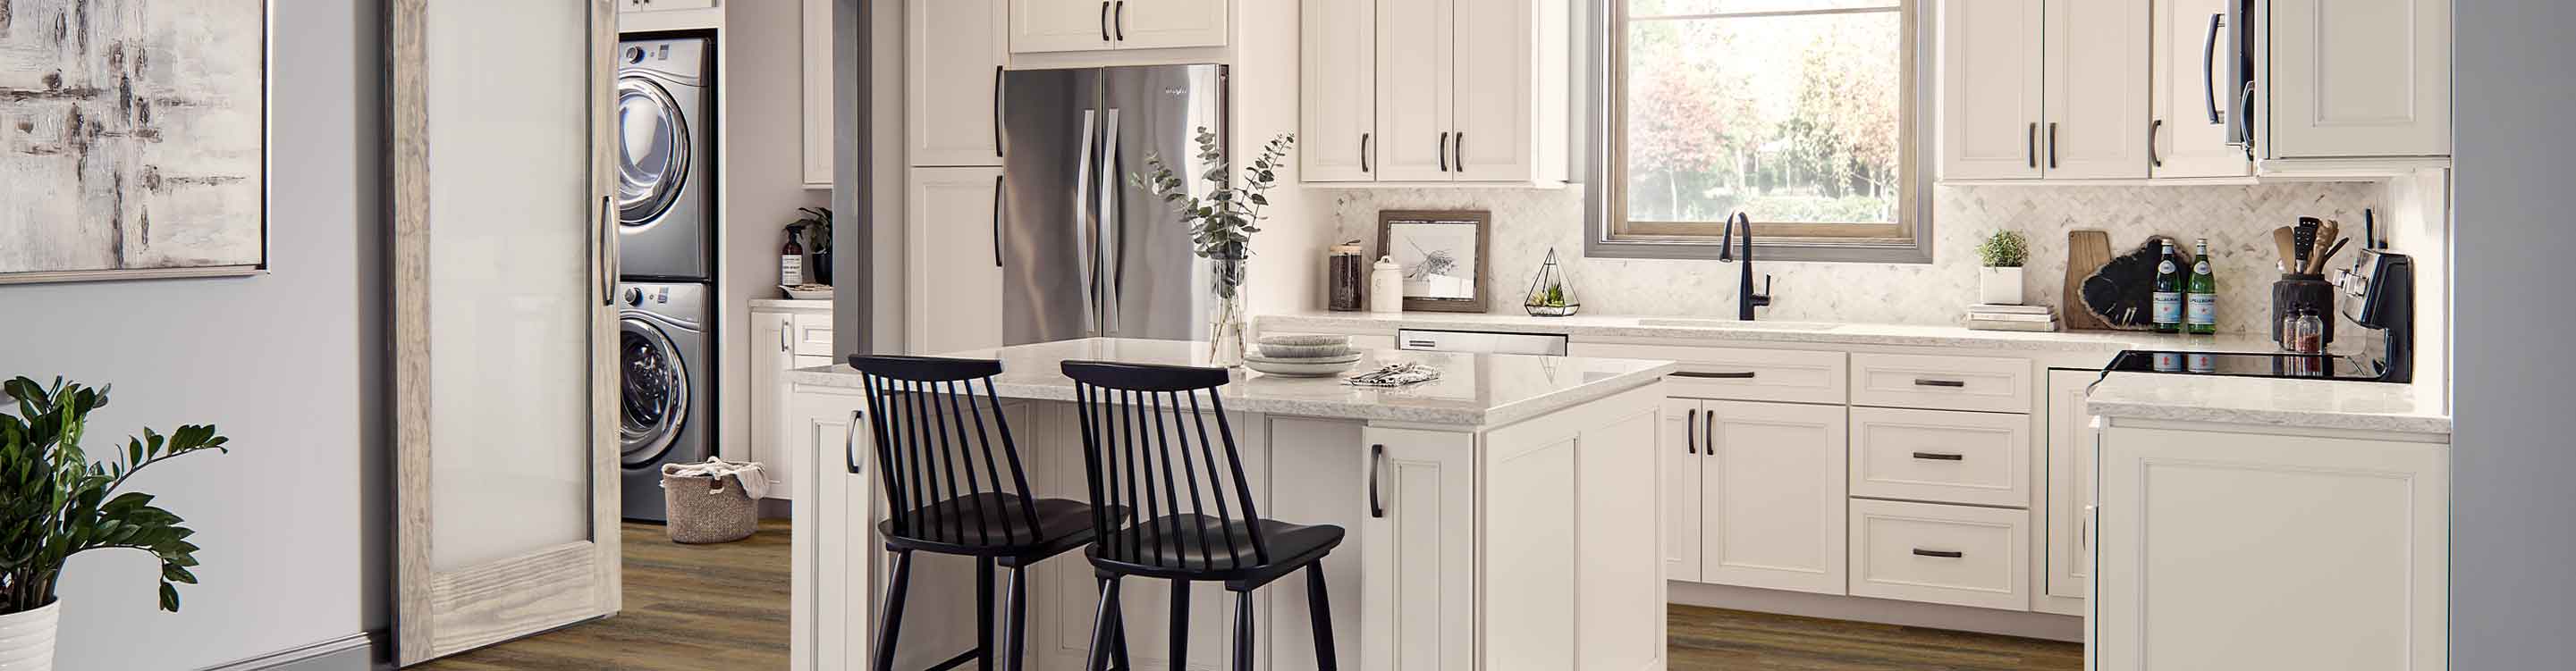 White cabinets in modern farmhouse kitchen